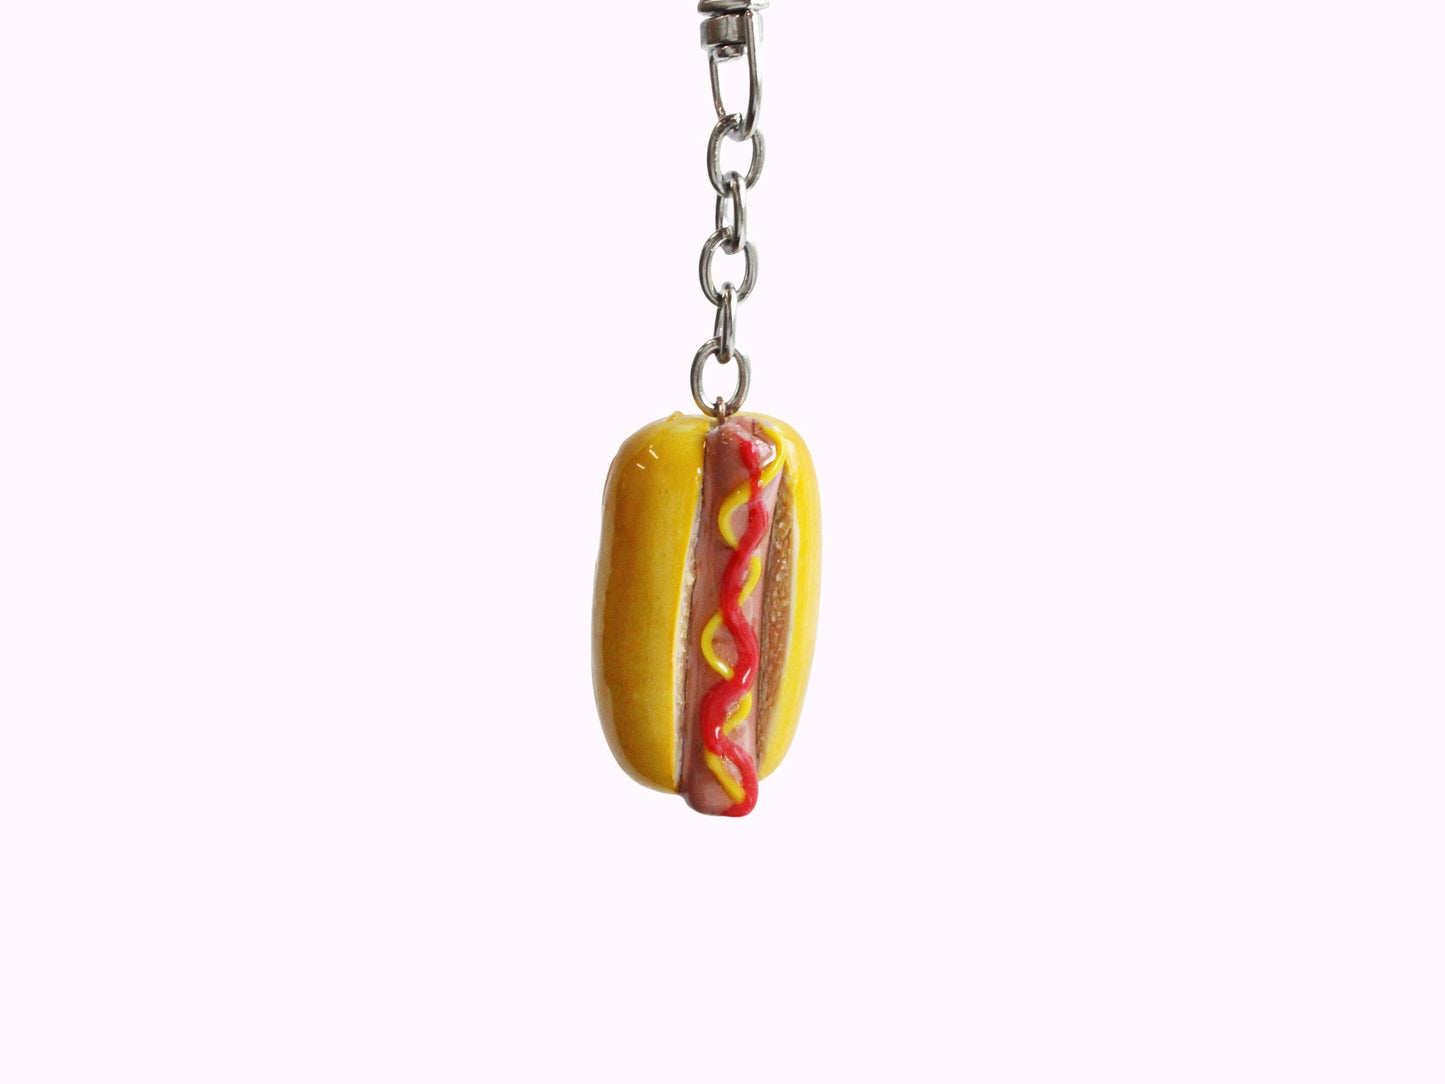 Realistic hotdog keychain. Hotdog with ketchip and mustard.